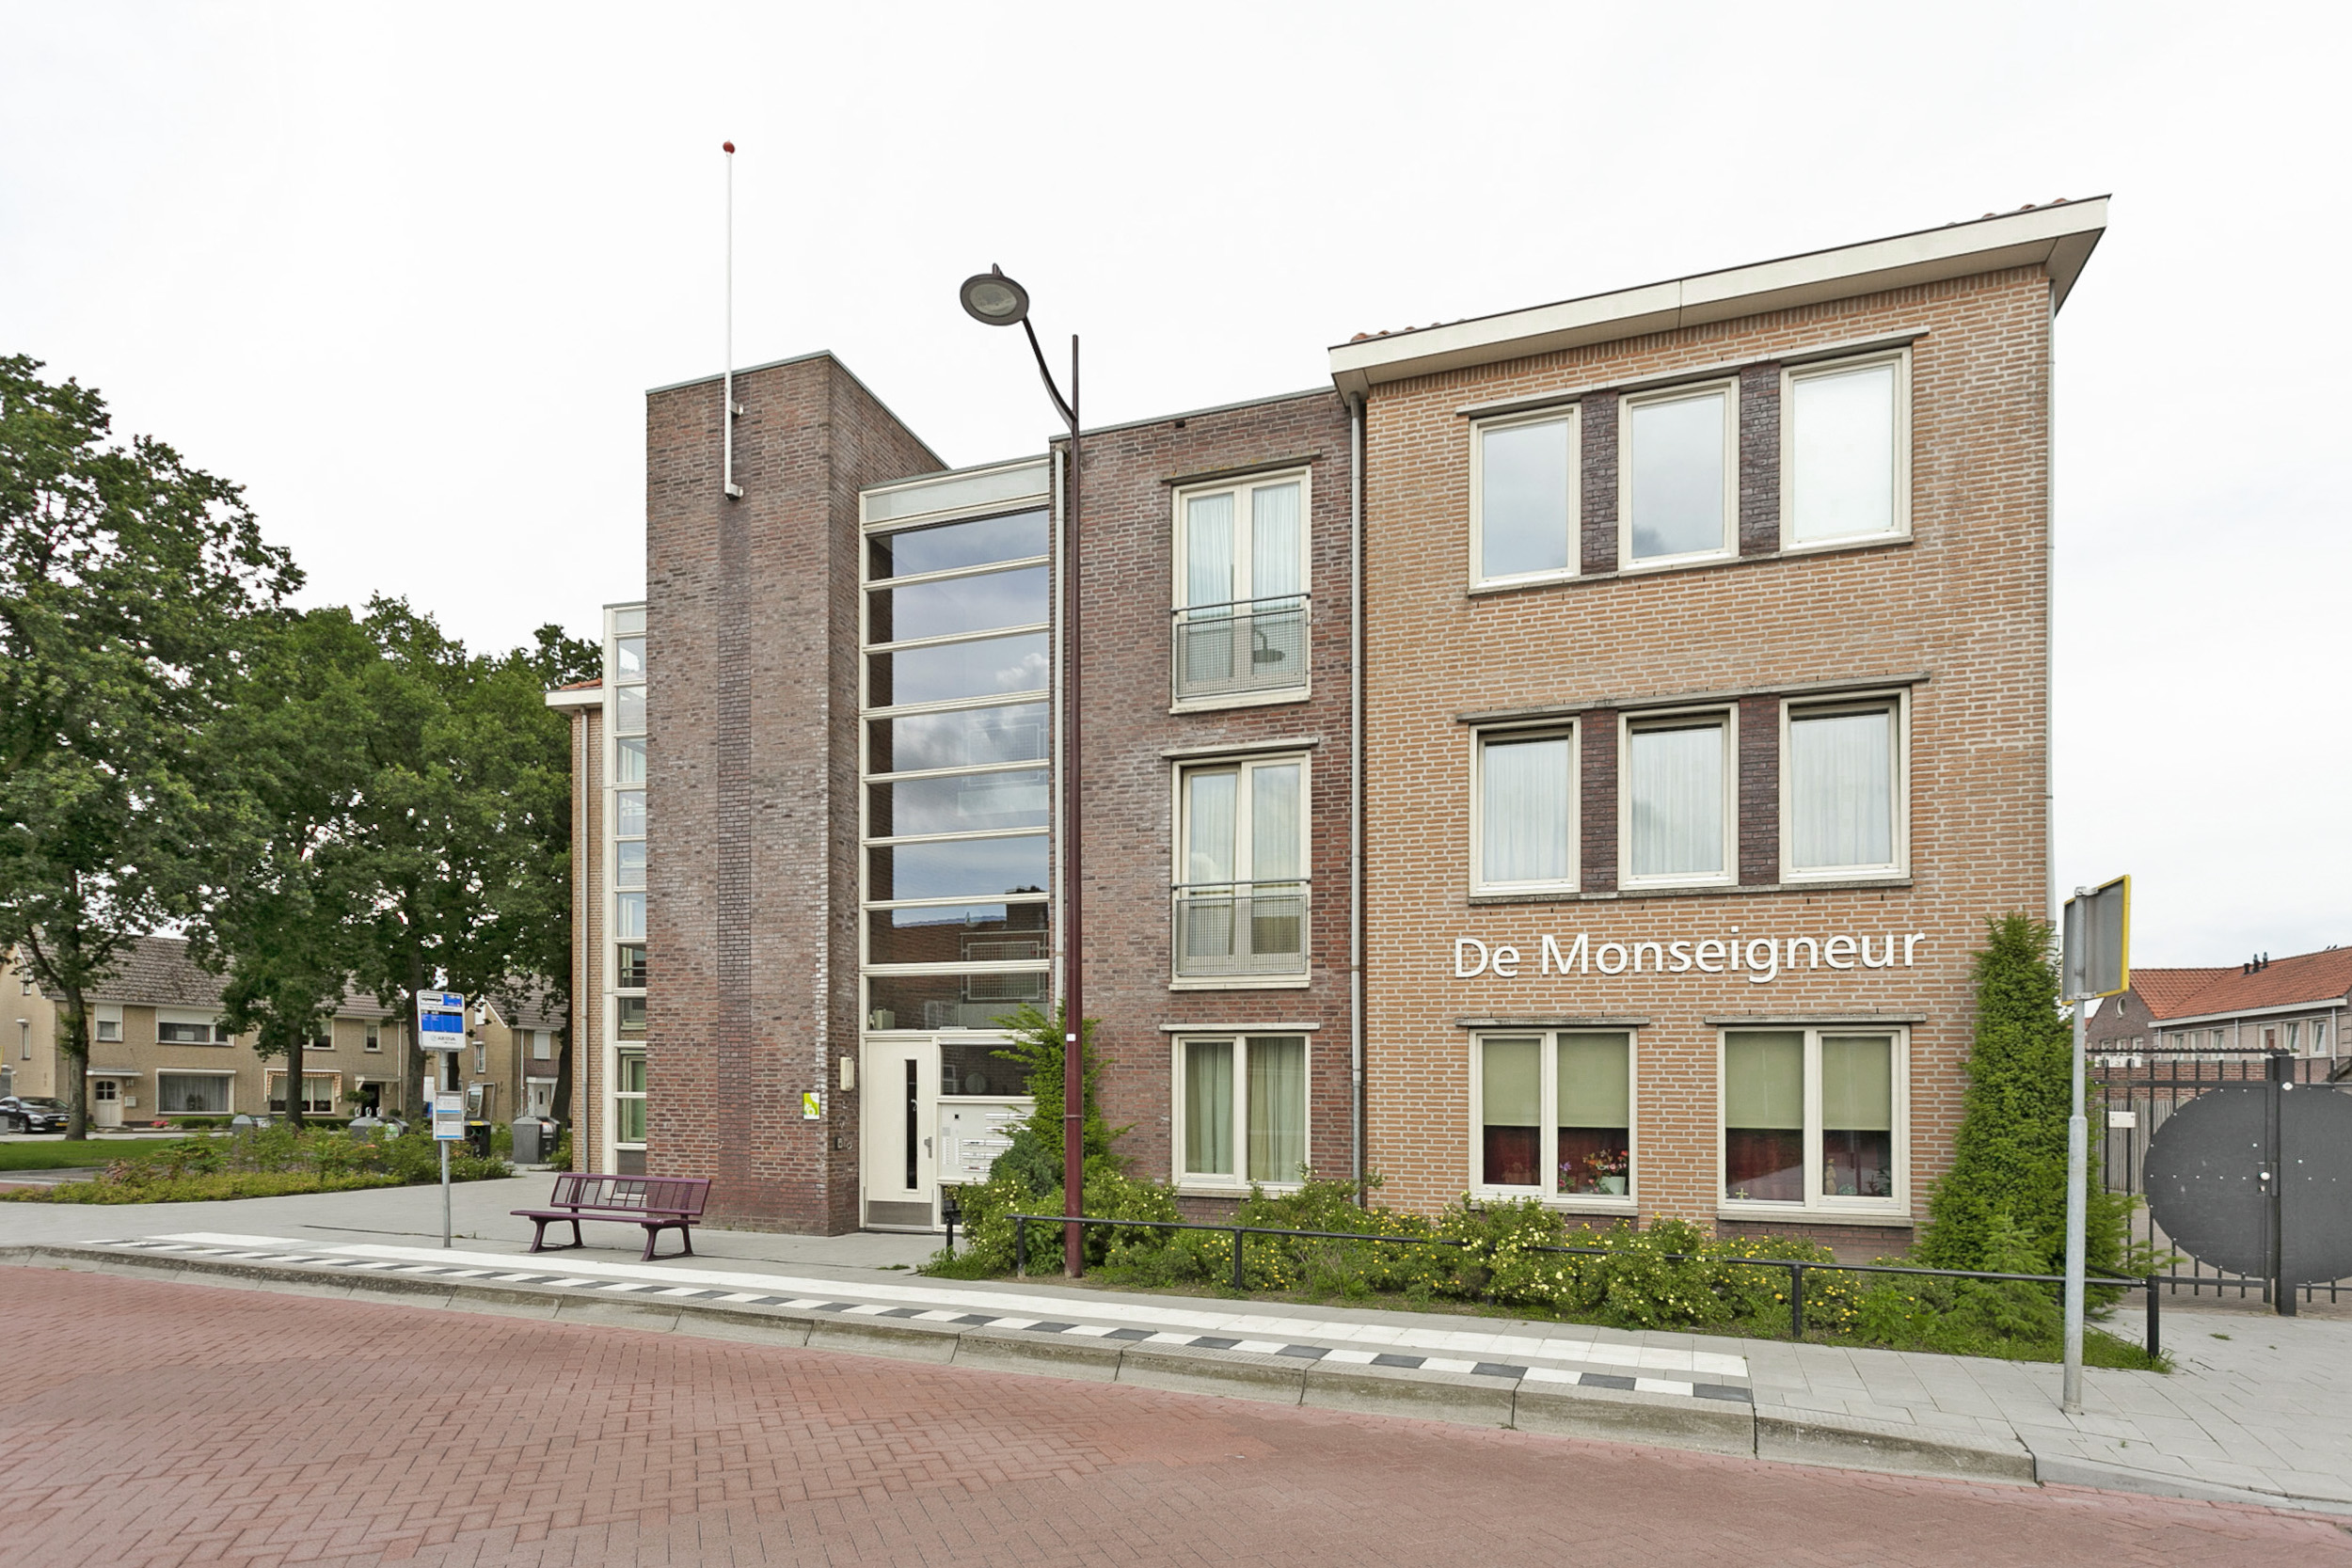 Monseigneur Doctor Poelsplein 11, 4731 KL Oudenbosch, Nederland